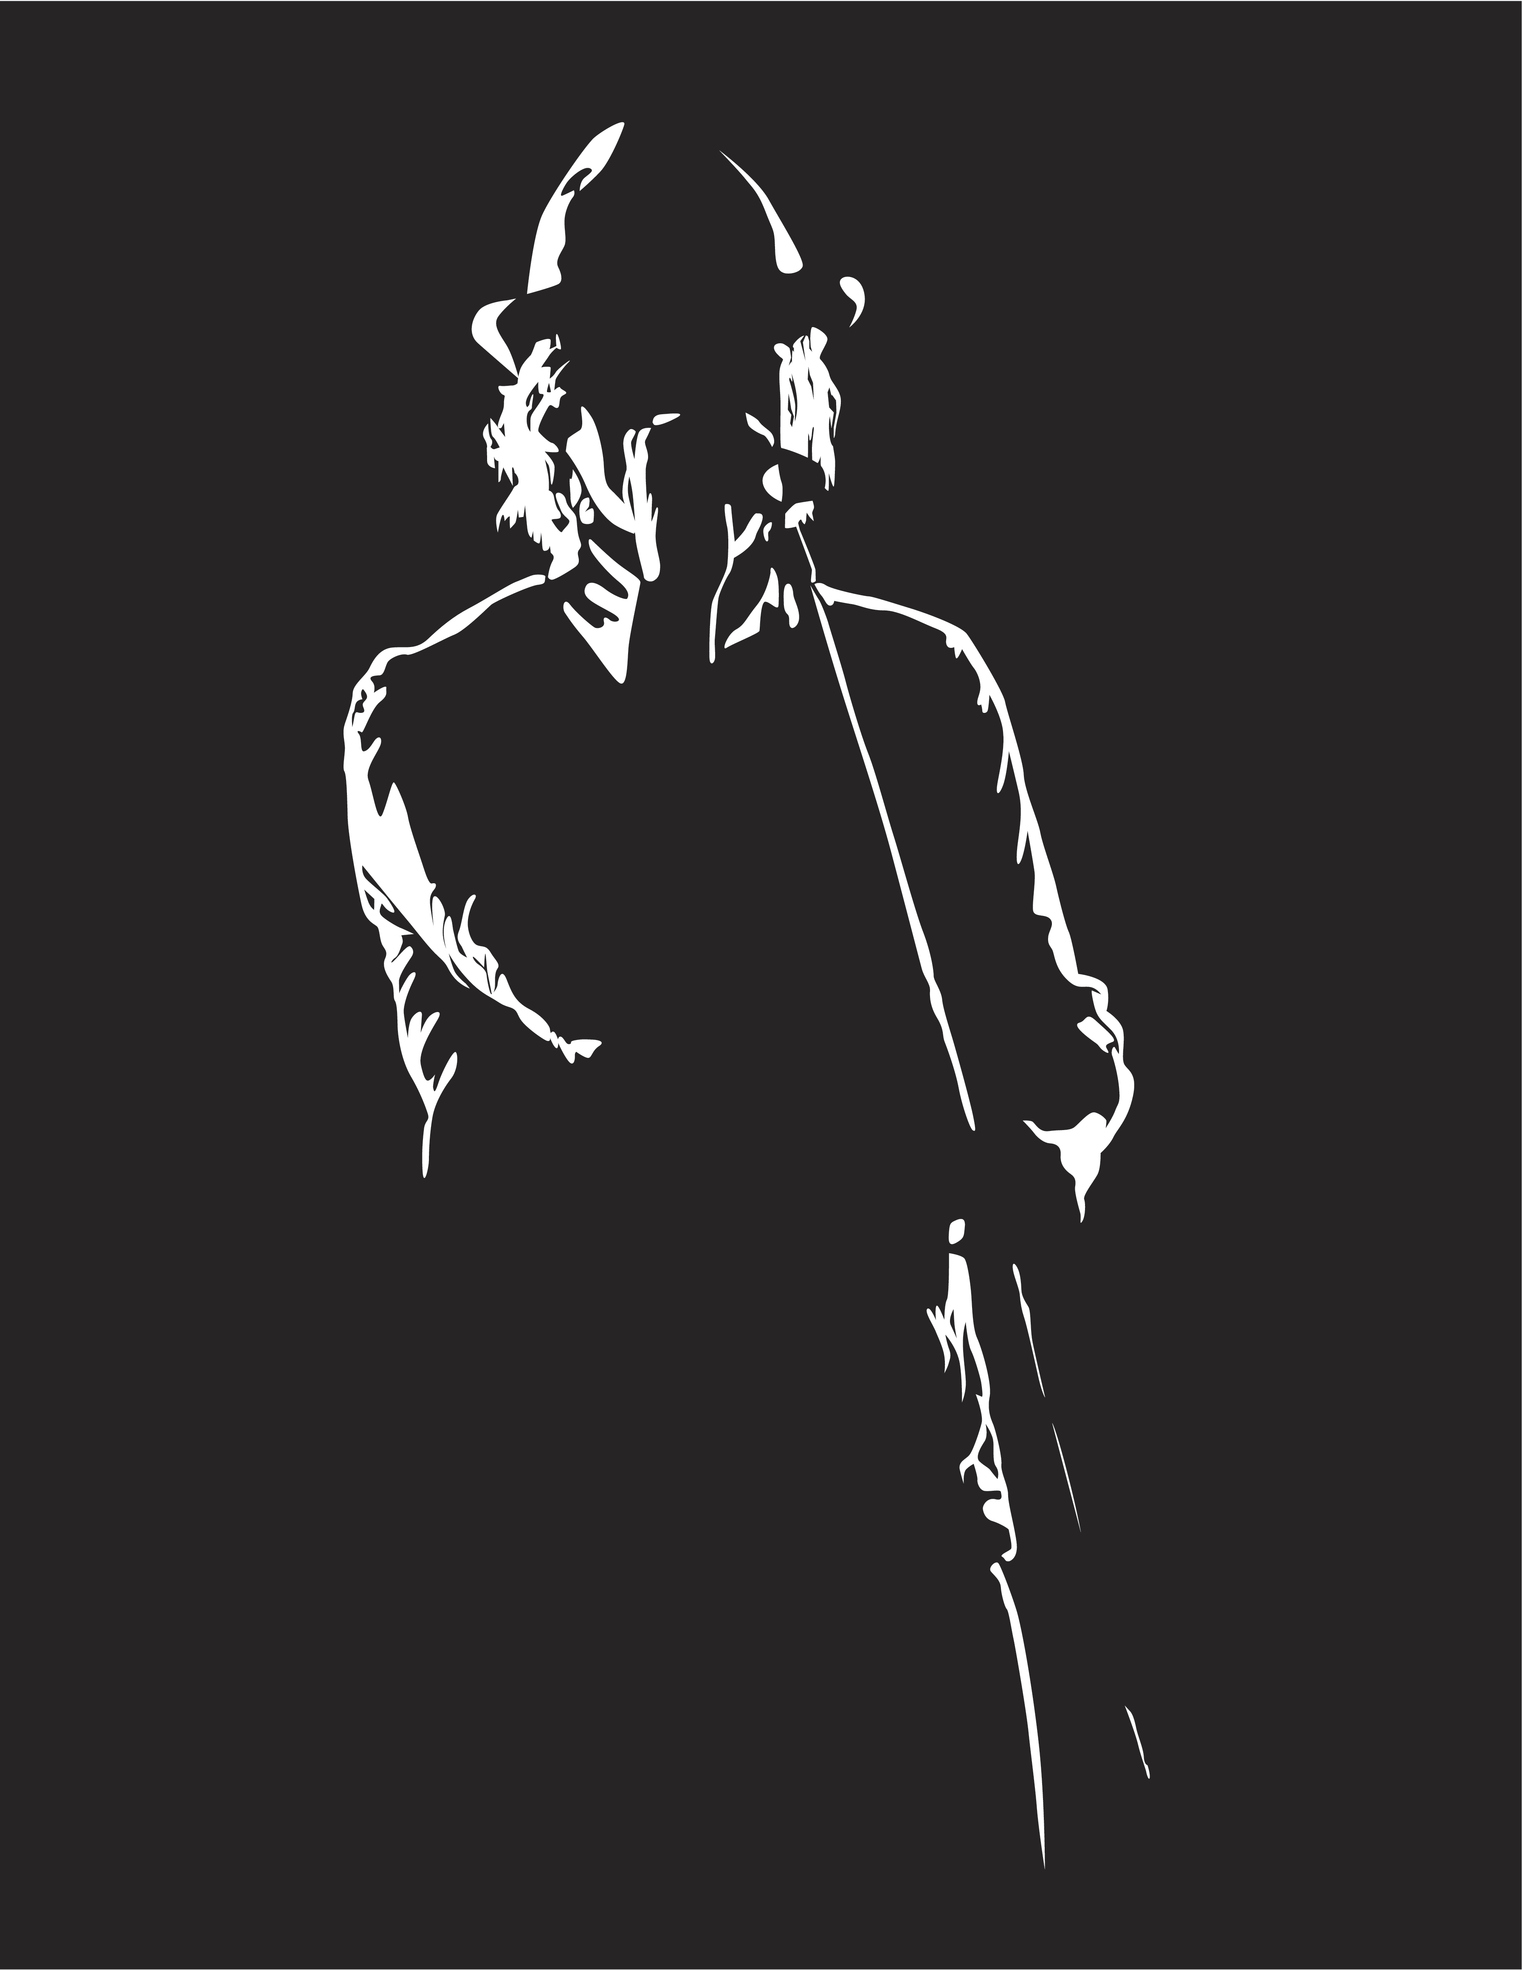 Chris Cornell Tribute Sketch  Steemit